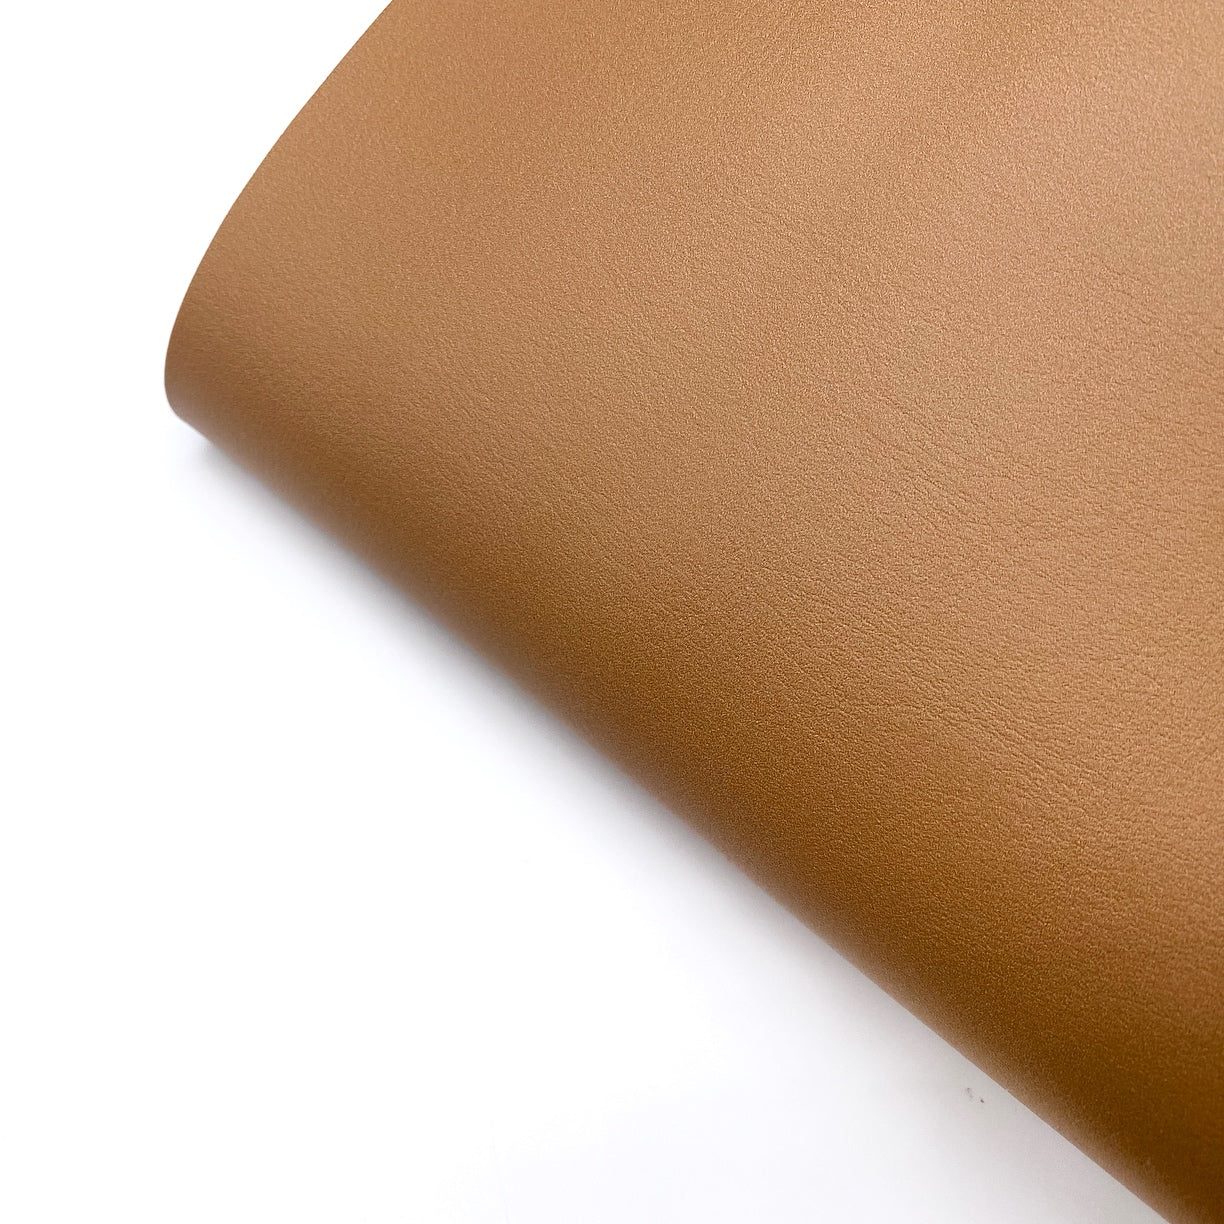 Caramel Latte Brown Premium Faux Leather Fabric Sheets